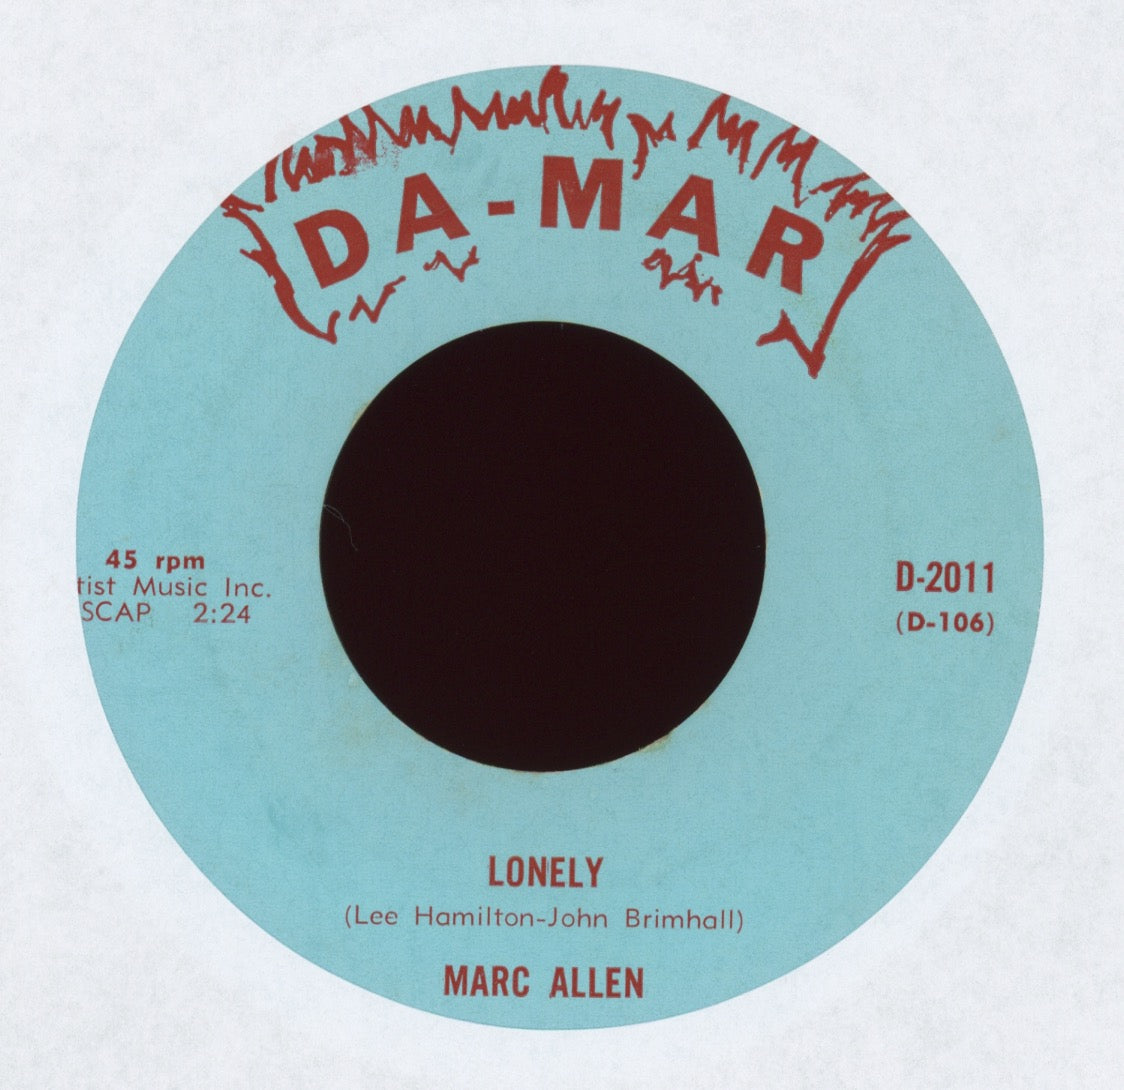 Marc Allen - Lonely on Da-Mar Rare Teen Popcorn 45